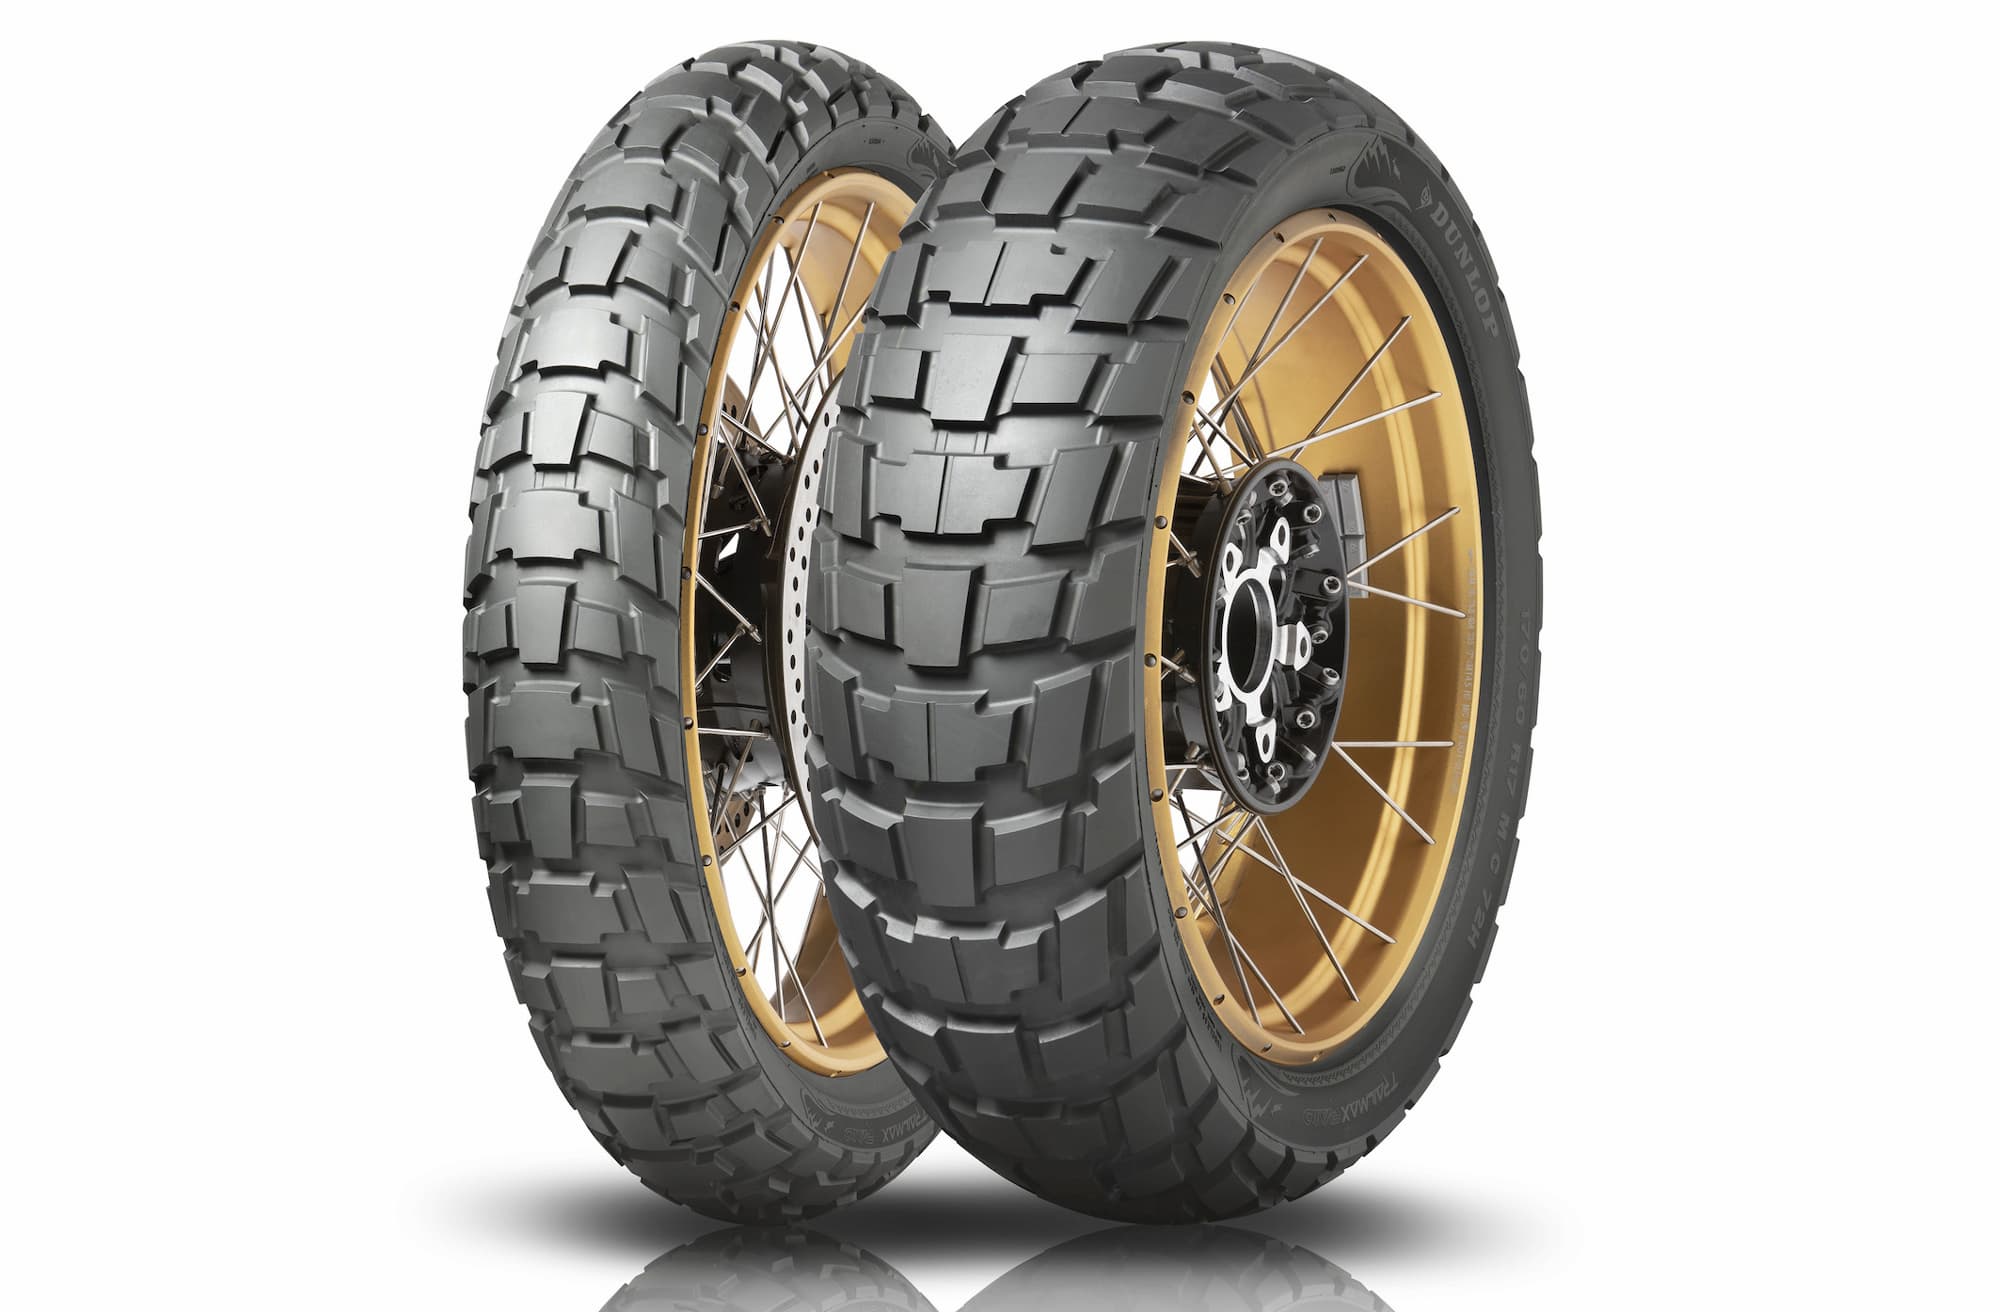 Neumáticos trail Dunlop lanza el nuevo Trailmax Raid